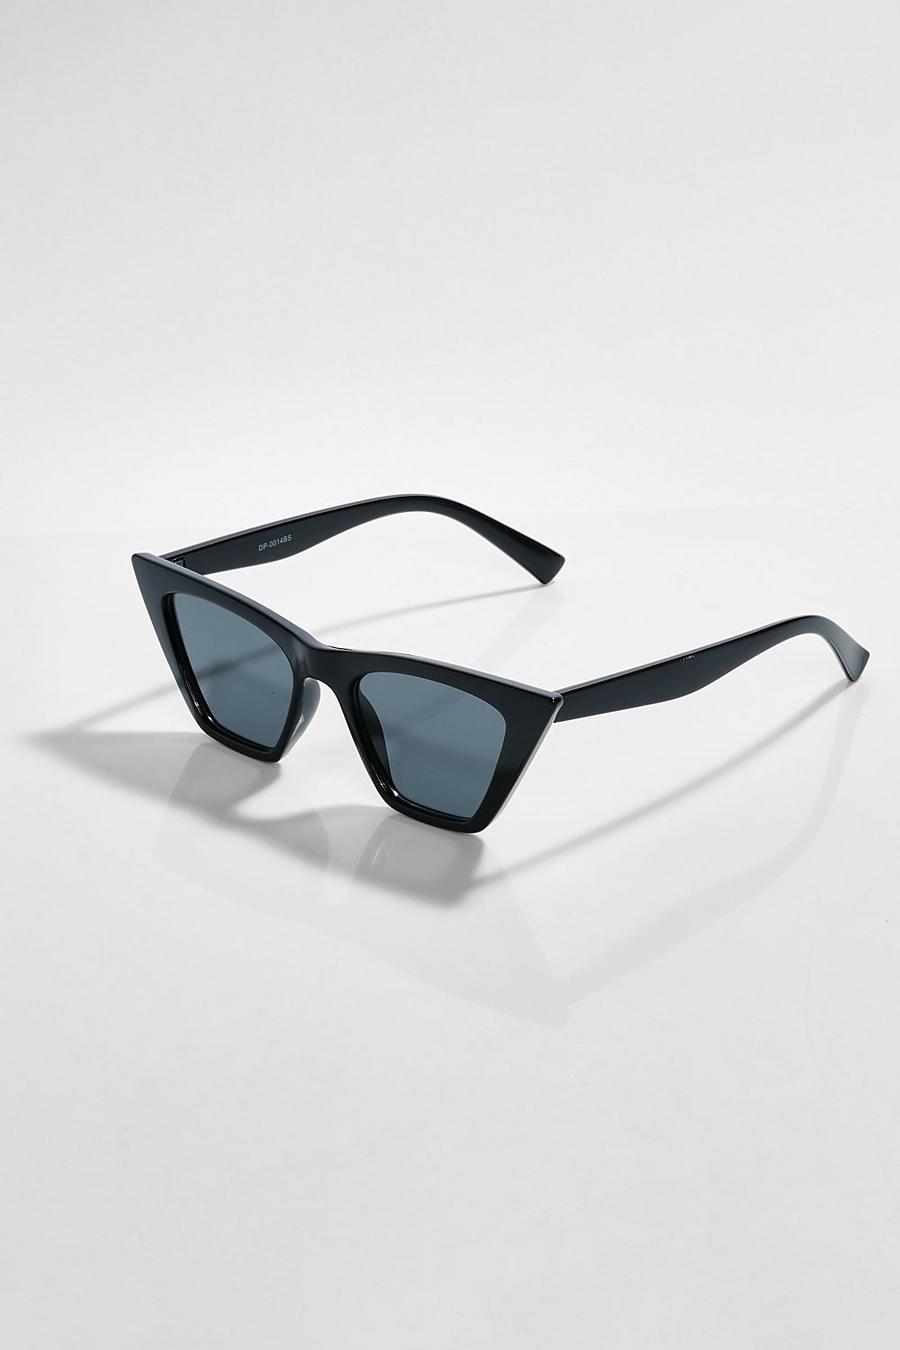 Gafas de sol oversize estilo ojo de gato de carey, Black